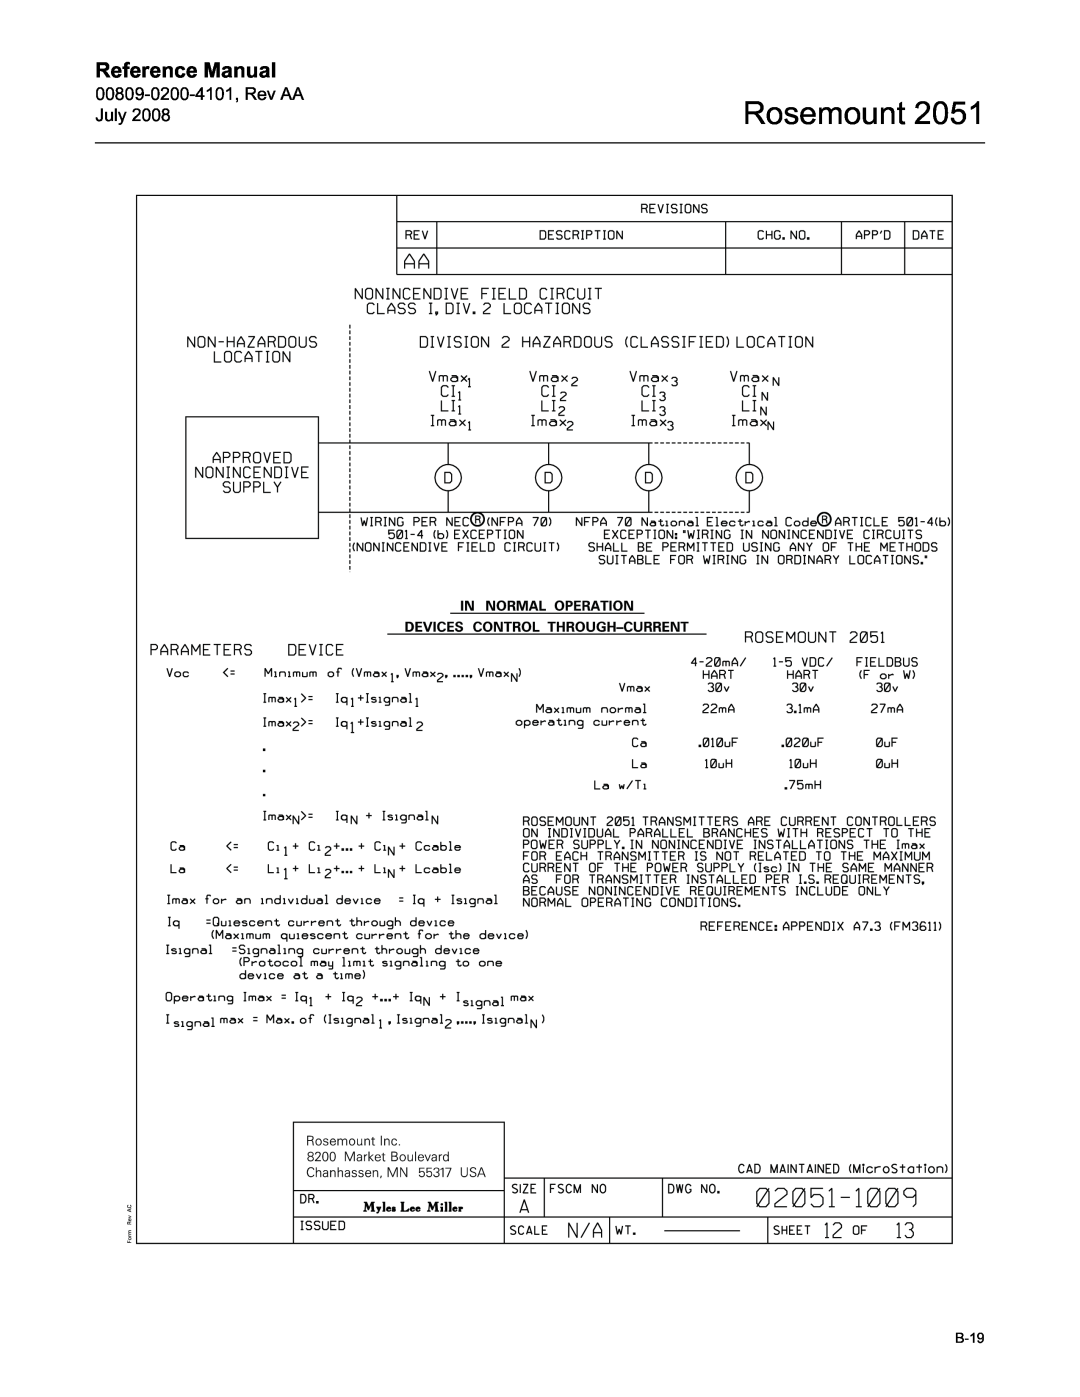 Emerson Process Management 2051 manual Rosemount, Reference Manual, B-19 